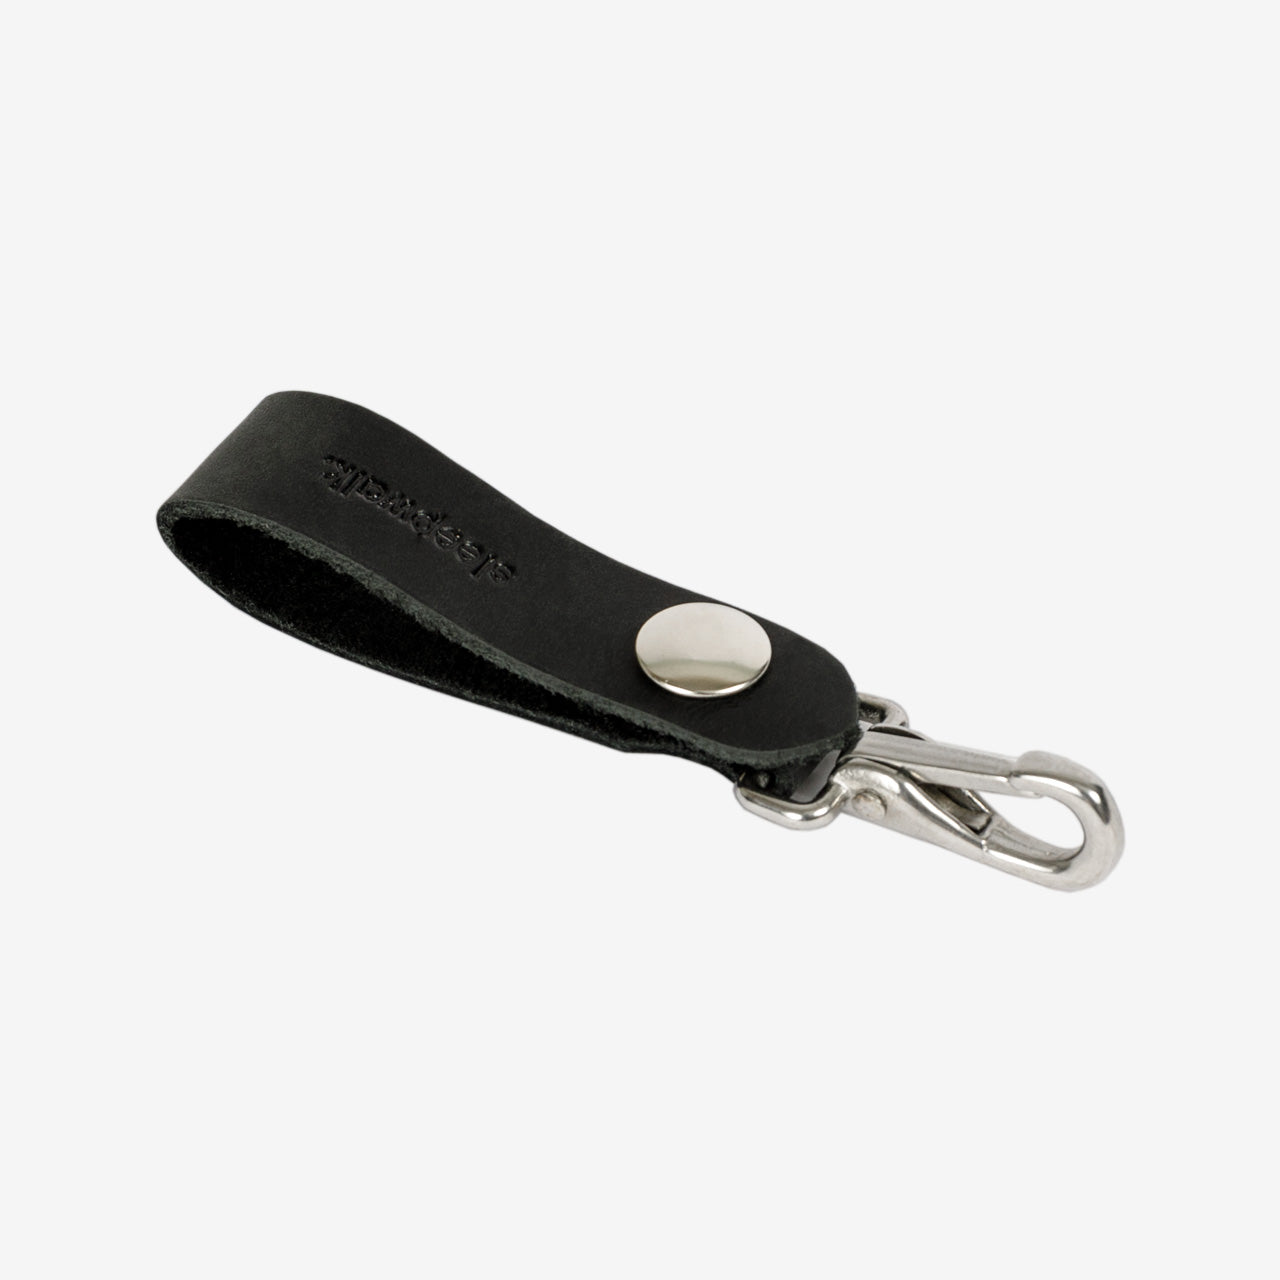 sleepwalk ltd key clip black leather